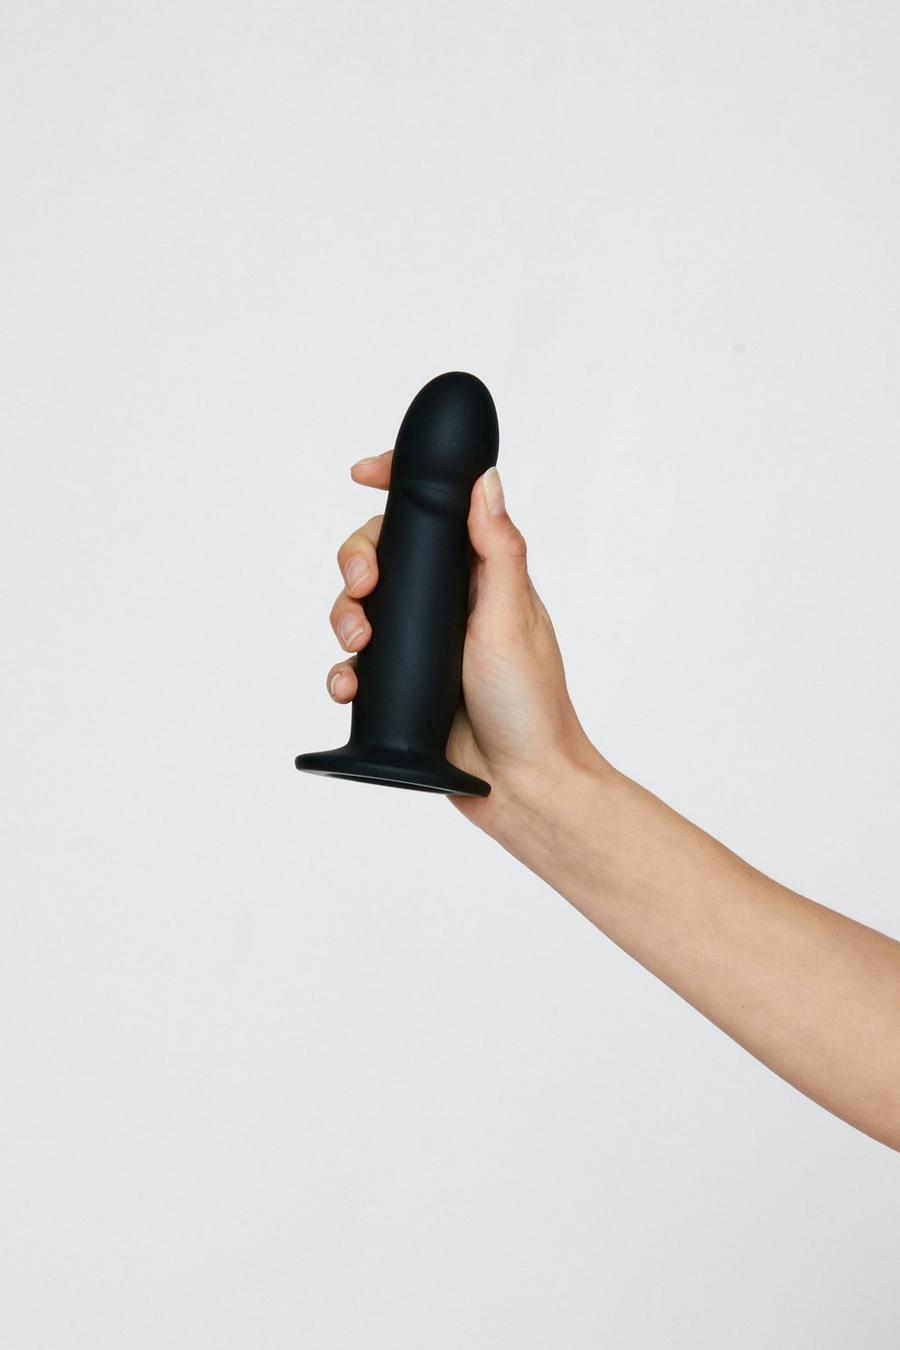 Black Medium Suction Cup Dildo Sex Toy